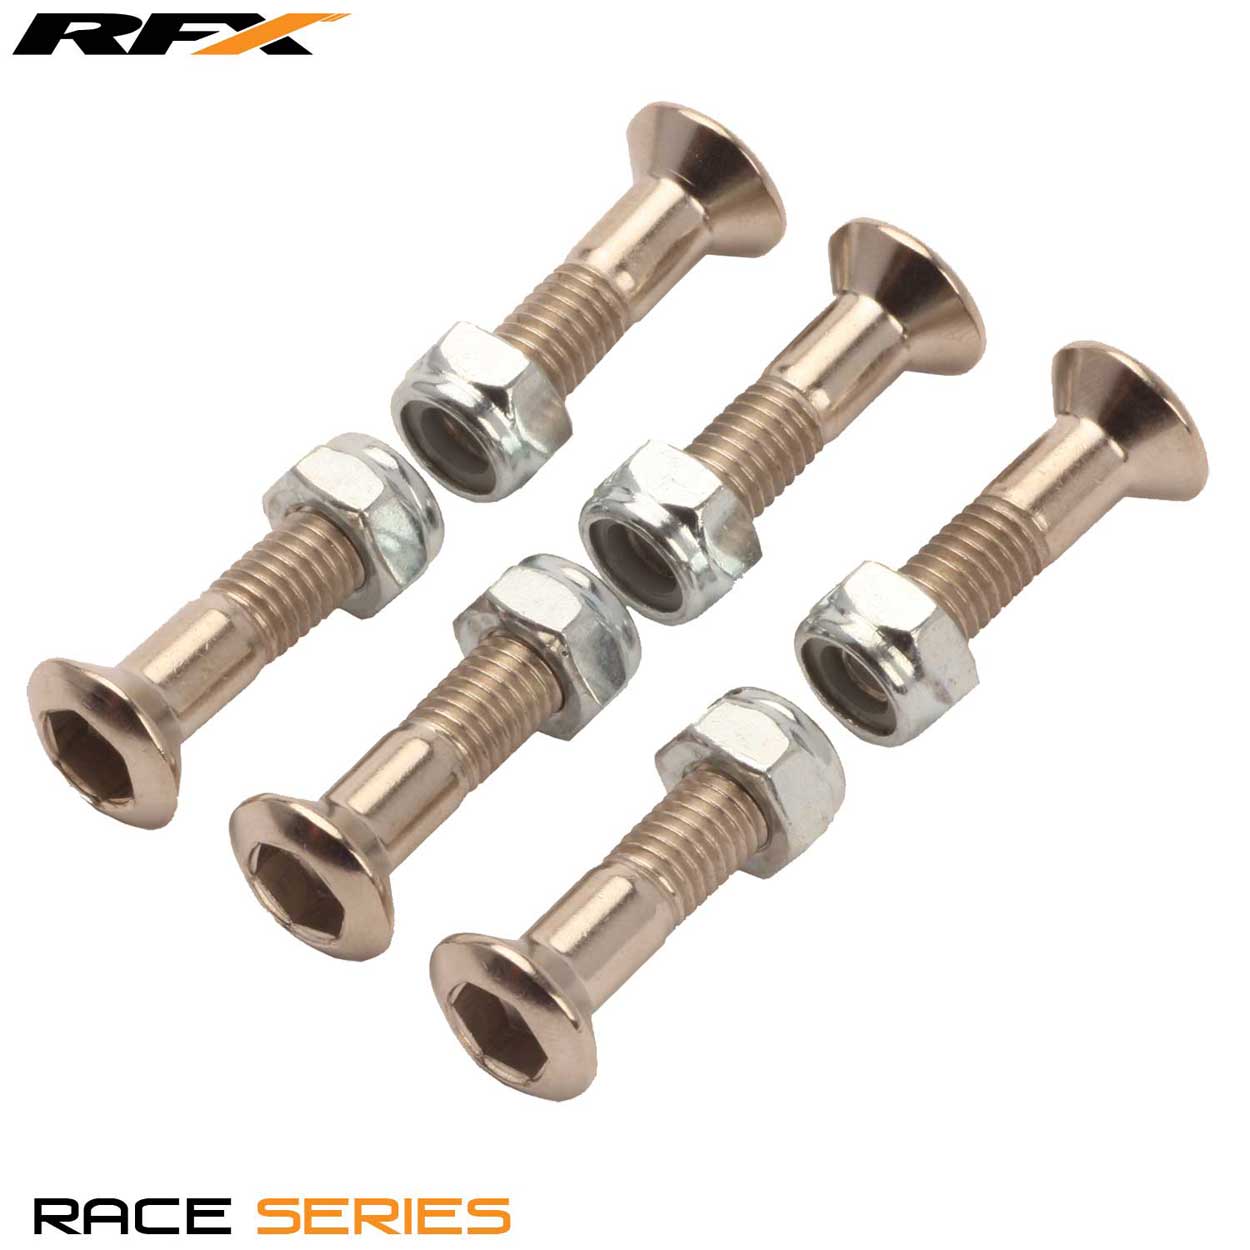 RFX Race Sprocket Bolt and Nut Kit (6pcs) M8 x 25mm KTM - Silver - RFX